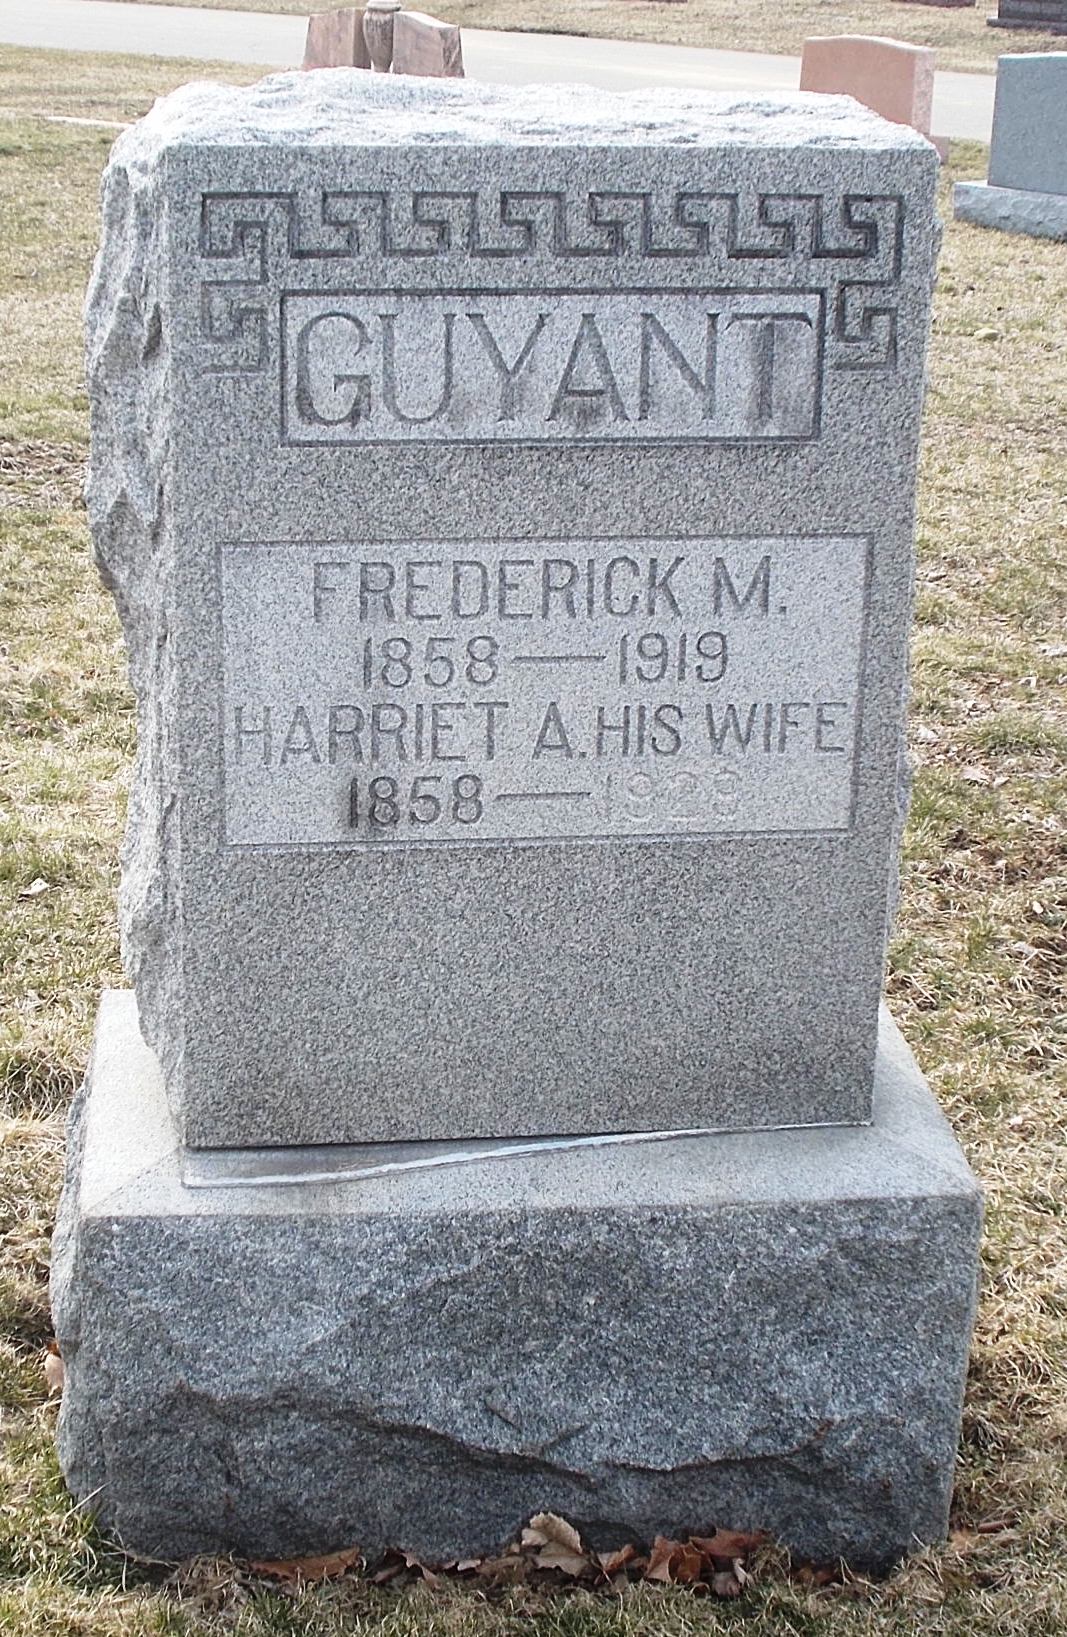 Frederick M Guyant